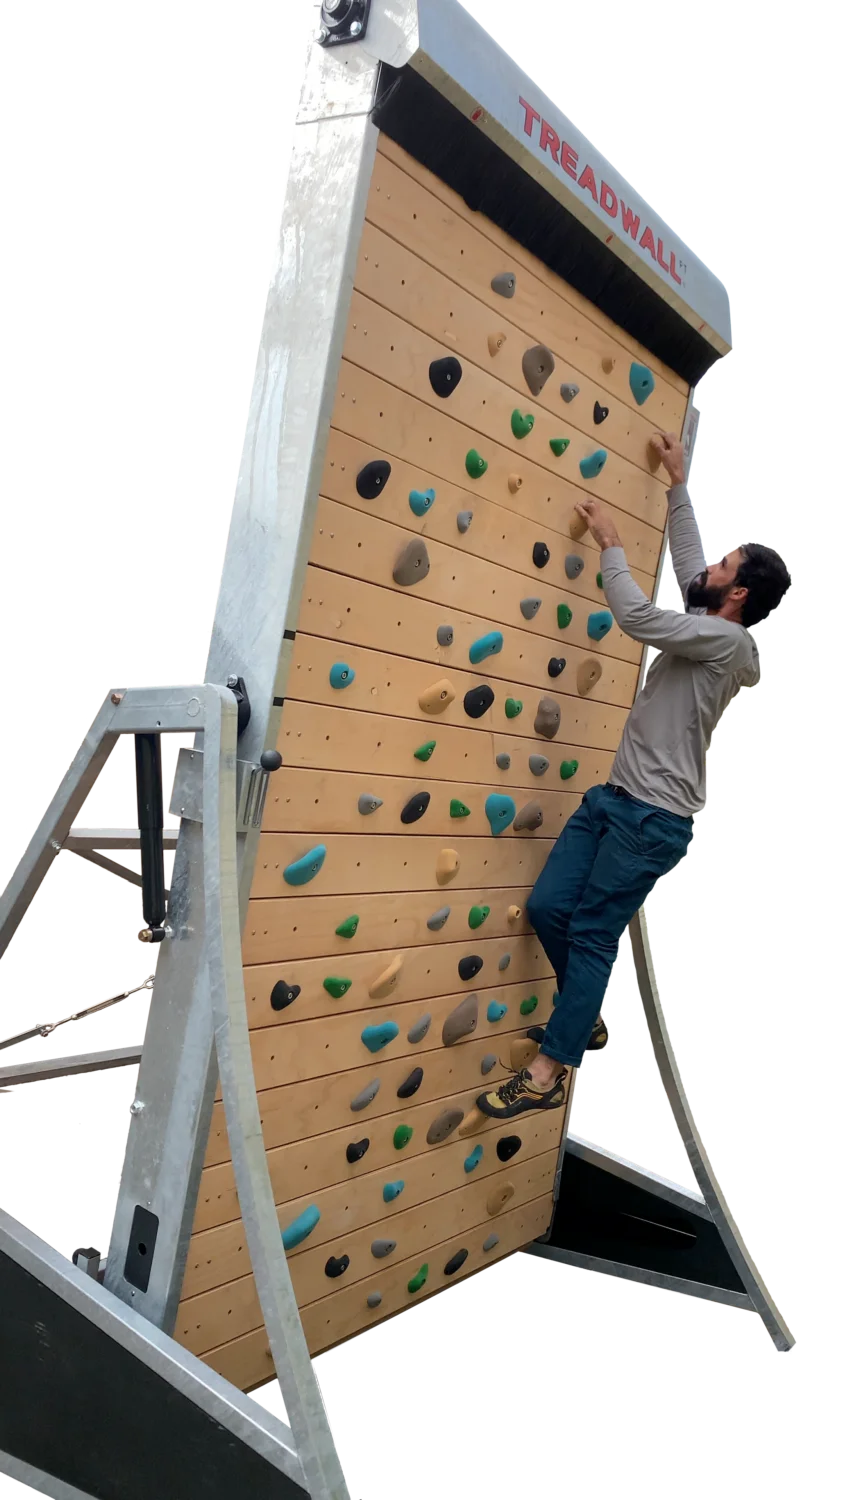 Boulderboard, Fitness climbing, Functional climbing, Youth climbing, Climbing walls, Training to climb, Indoor climbing, home fitness climbing wall, commercial climbing walls